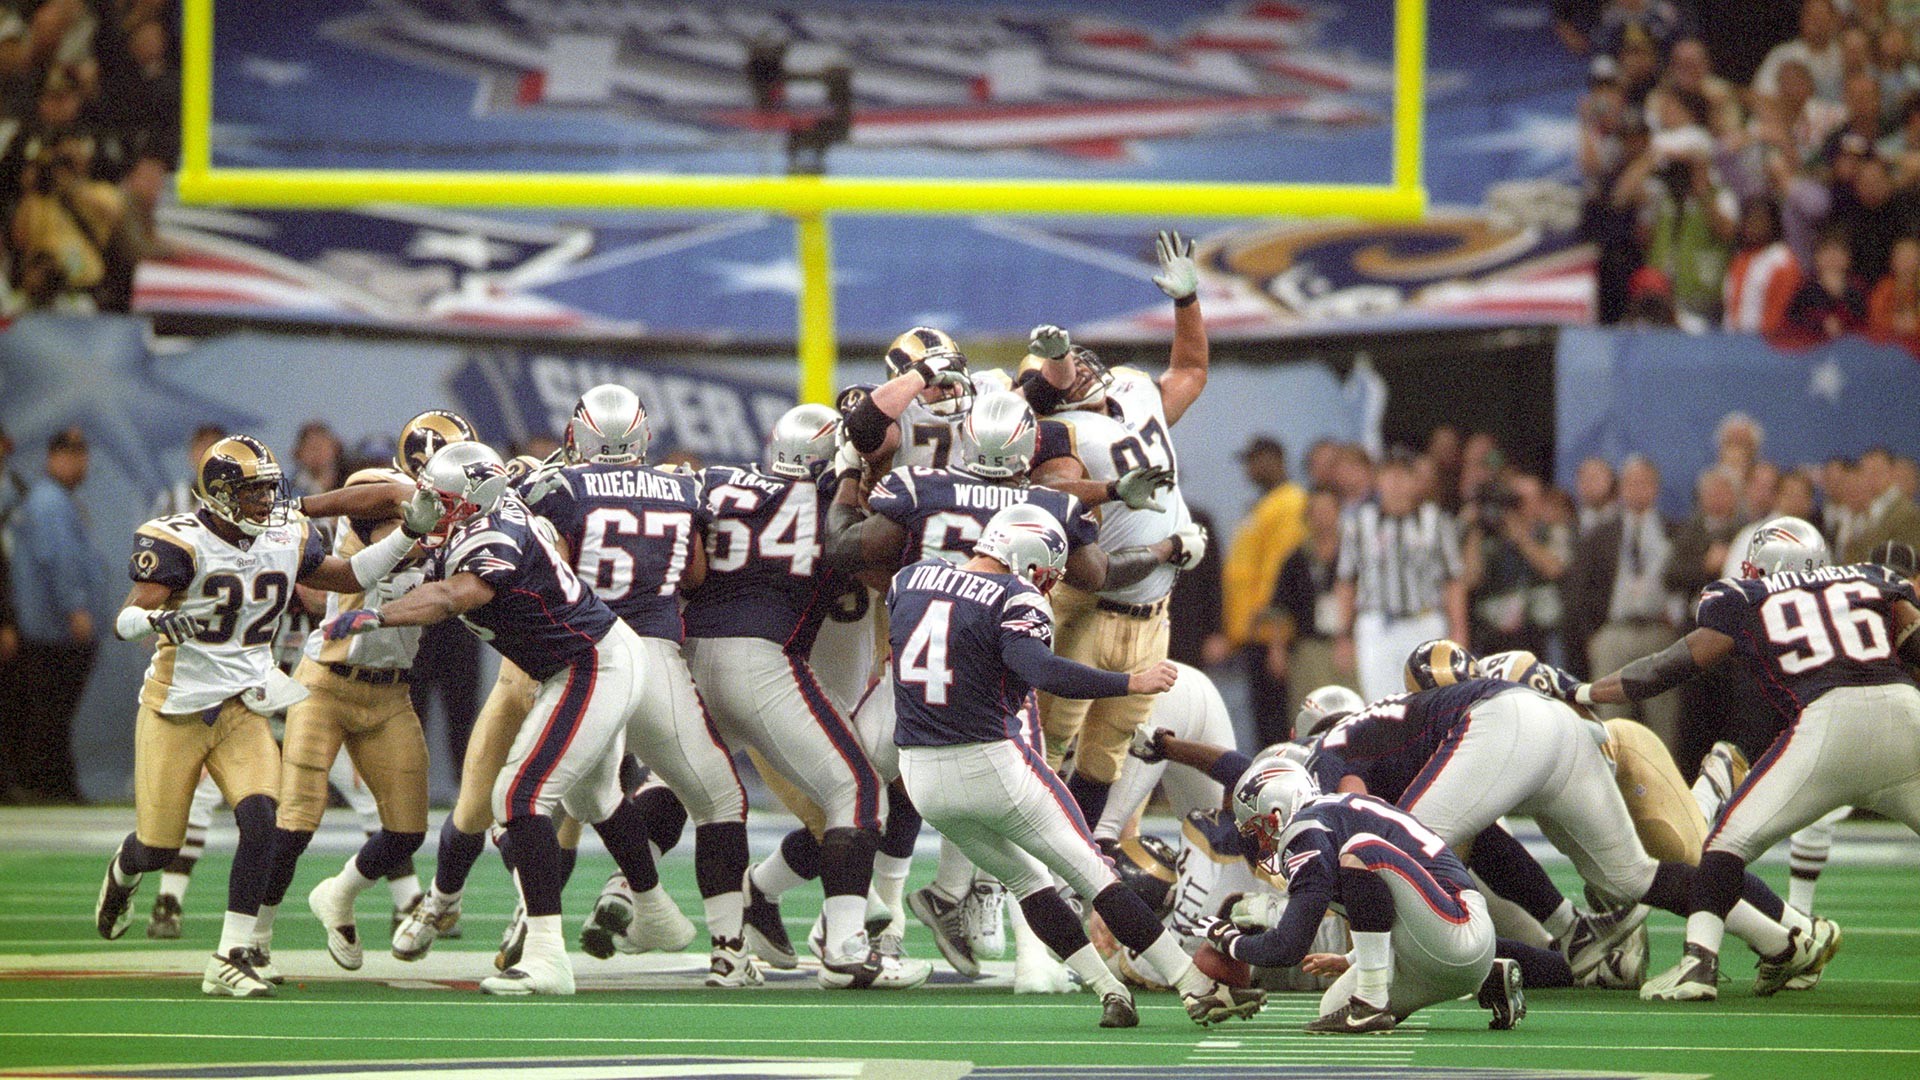 1920x1080 New England Patriots images Adam Vinatieri's Super Bowl Winning Field Goal  HD wallpaper and background photos